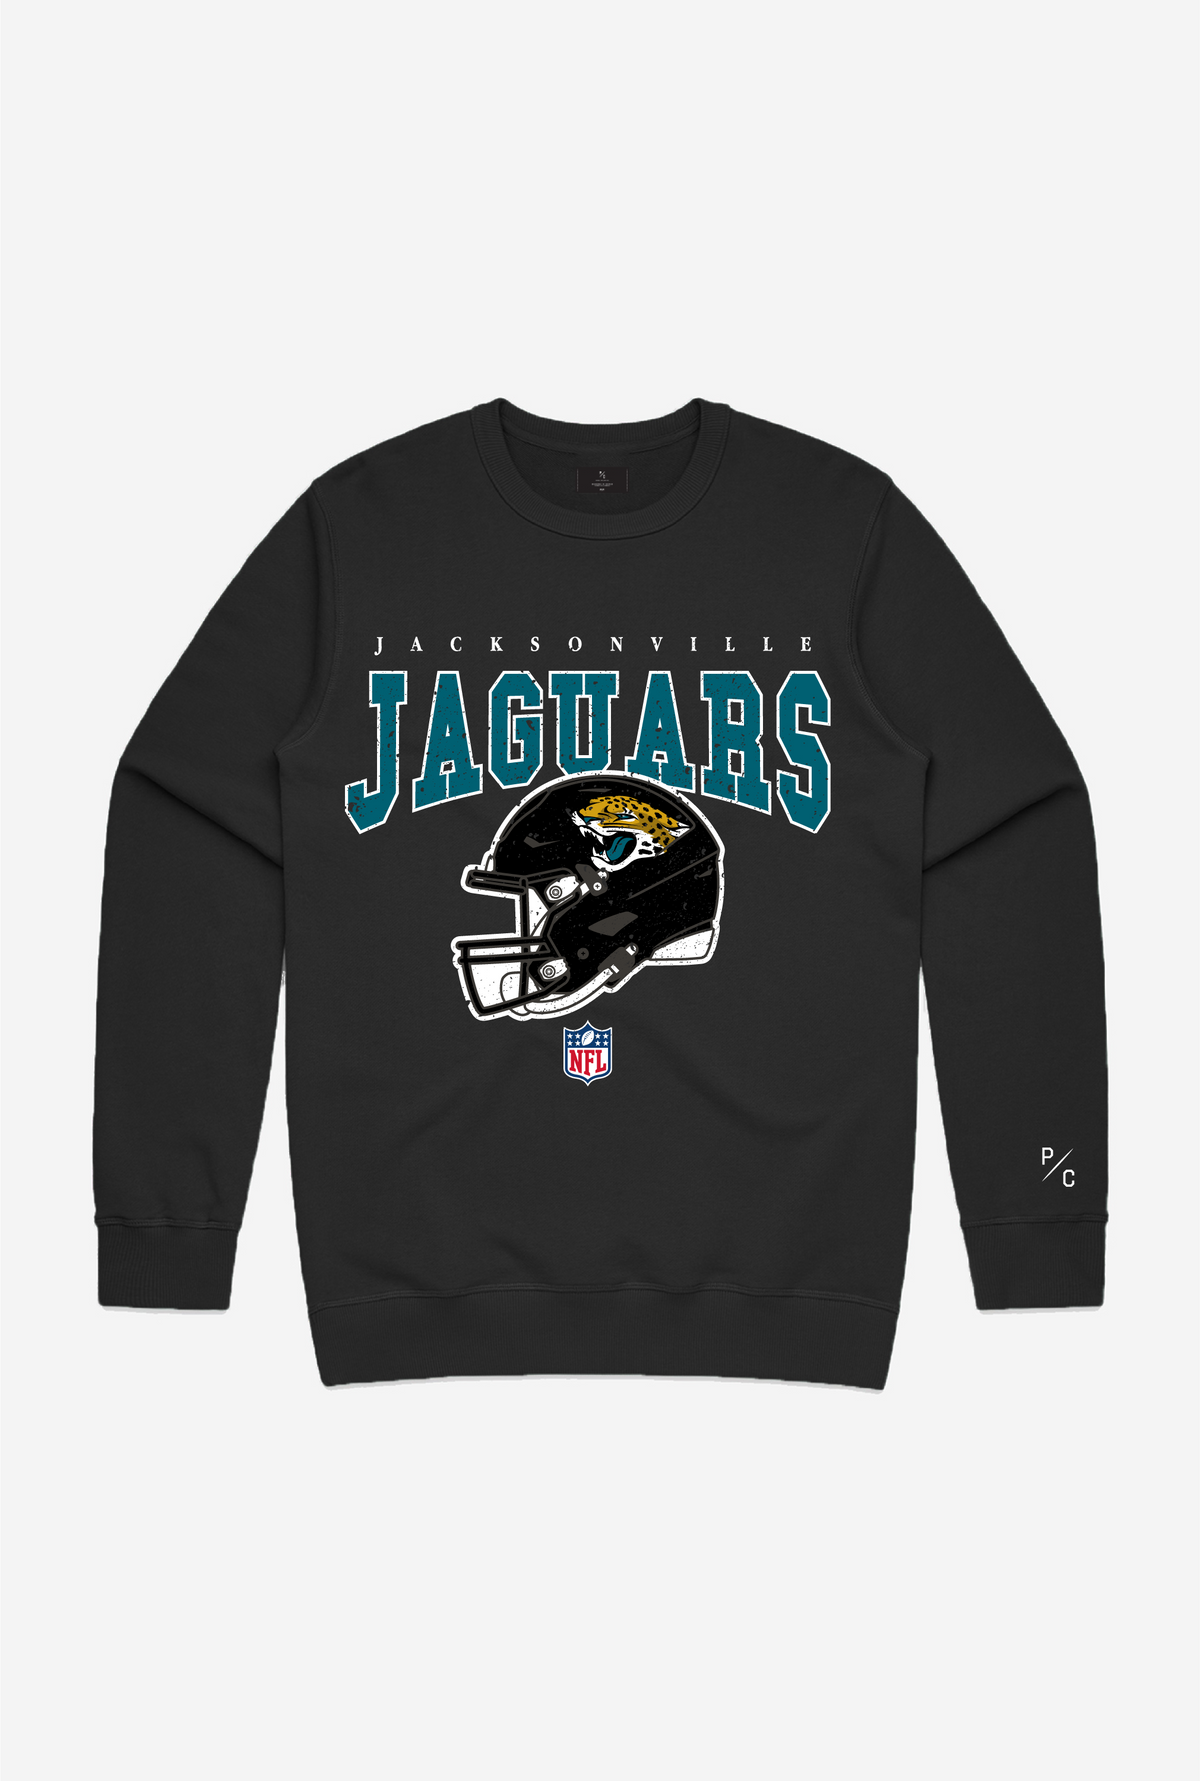 Jacksonville Jaguars Vintage Crewneck - Black